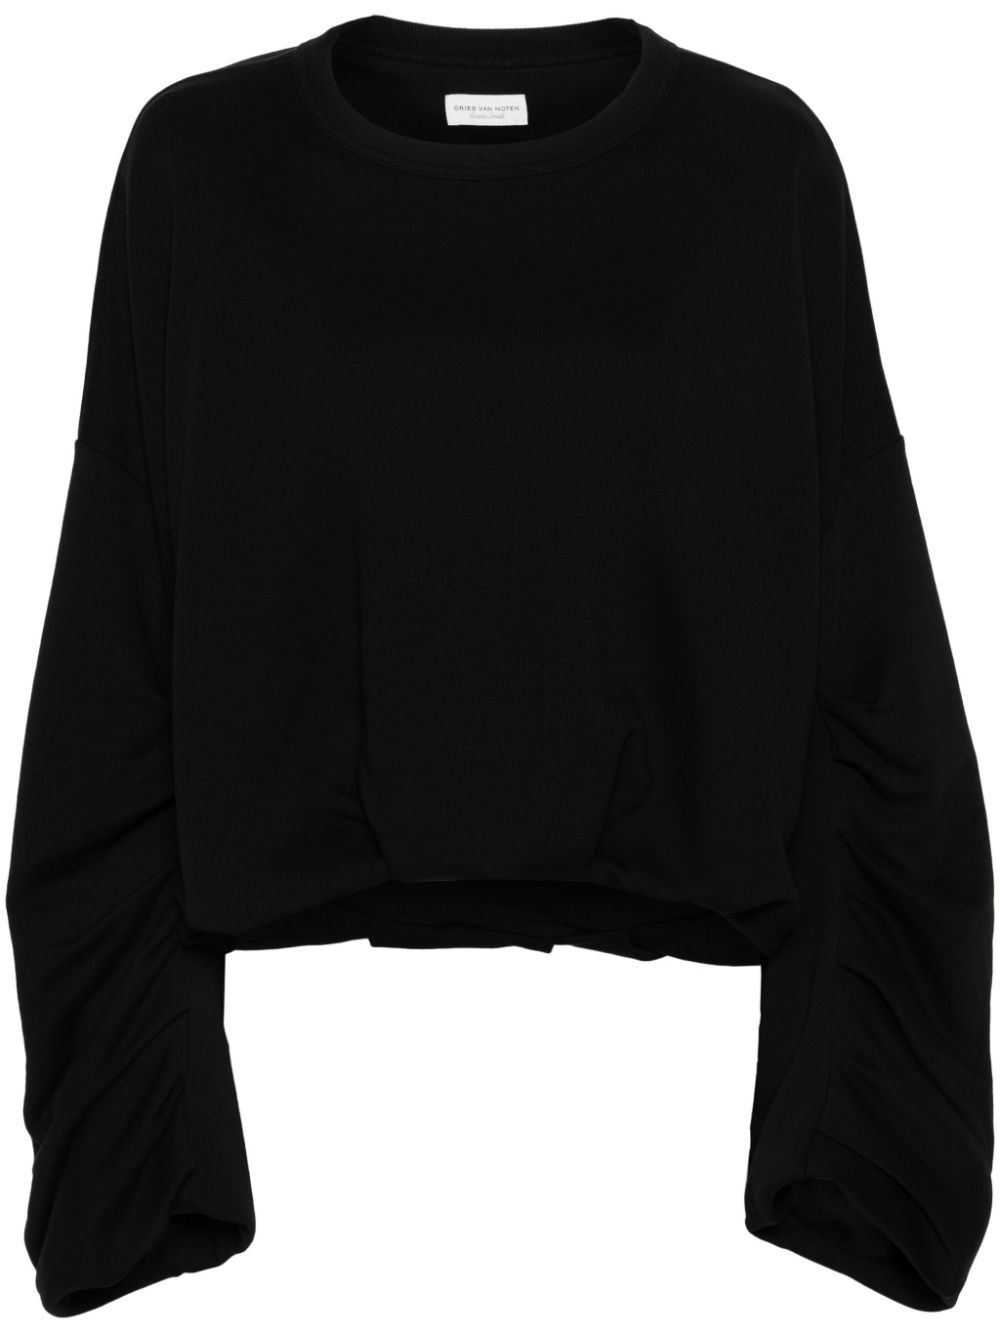 Black Puffball design sweater